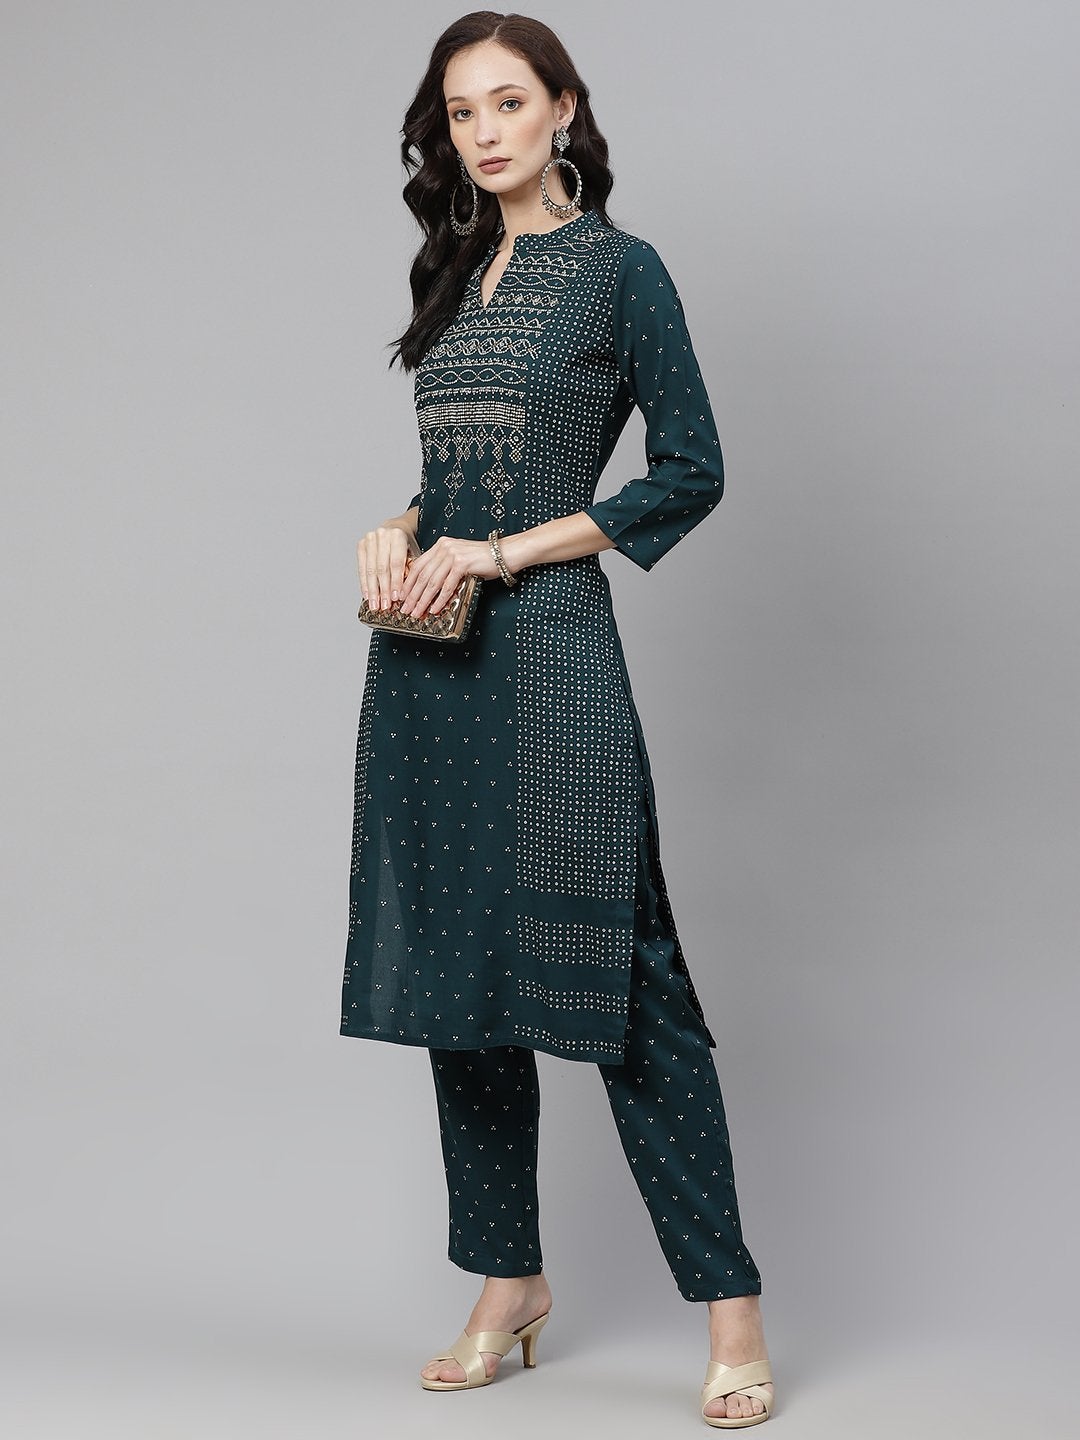 Women's Dark Green Bandhej printed Rayon kurta with pants - Divena